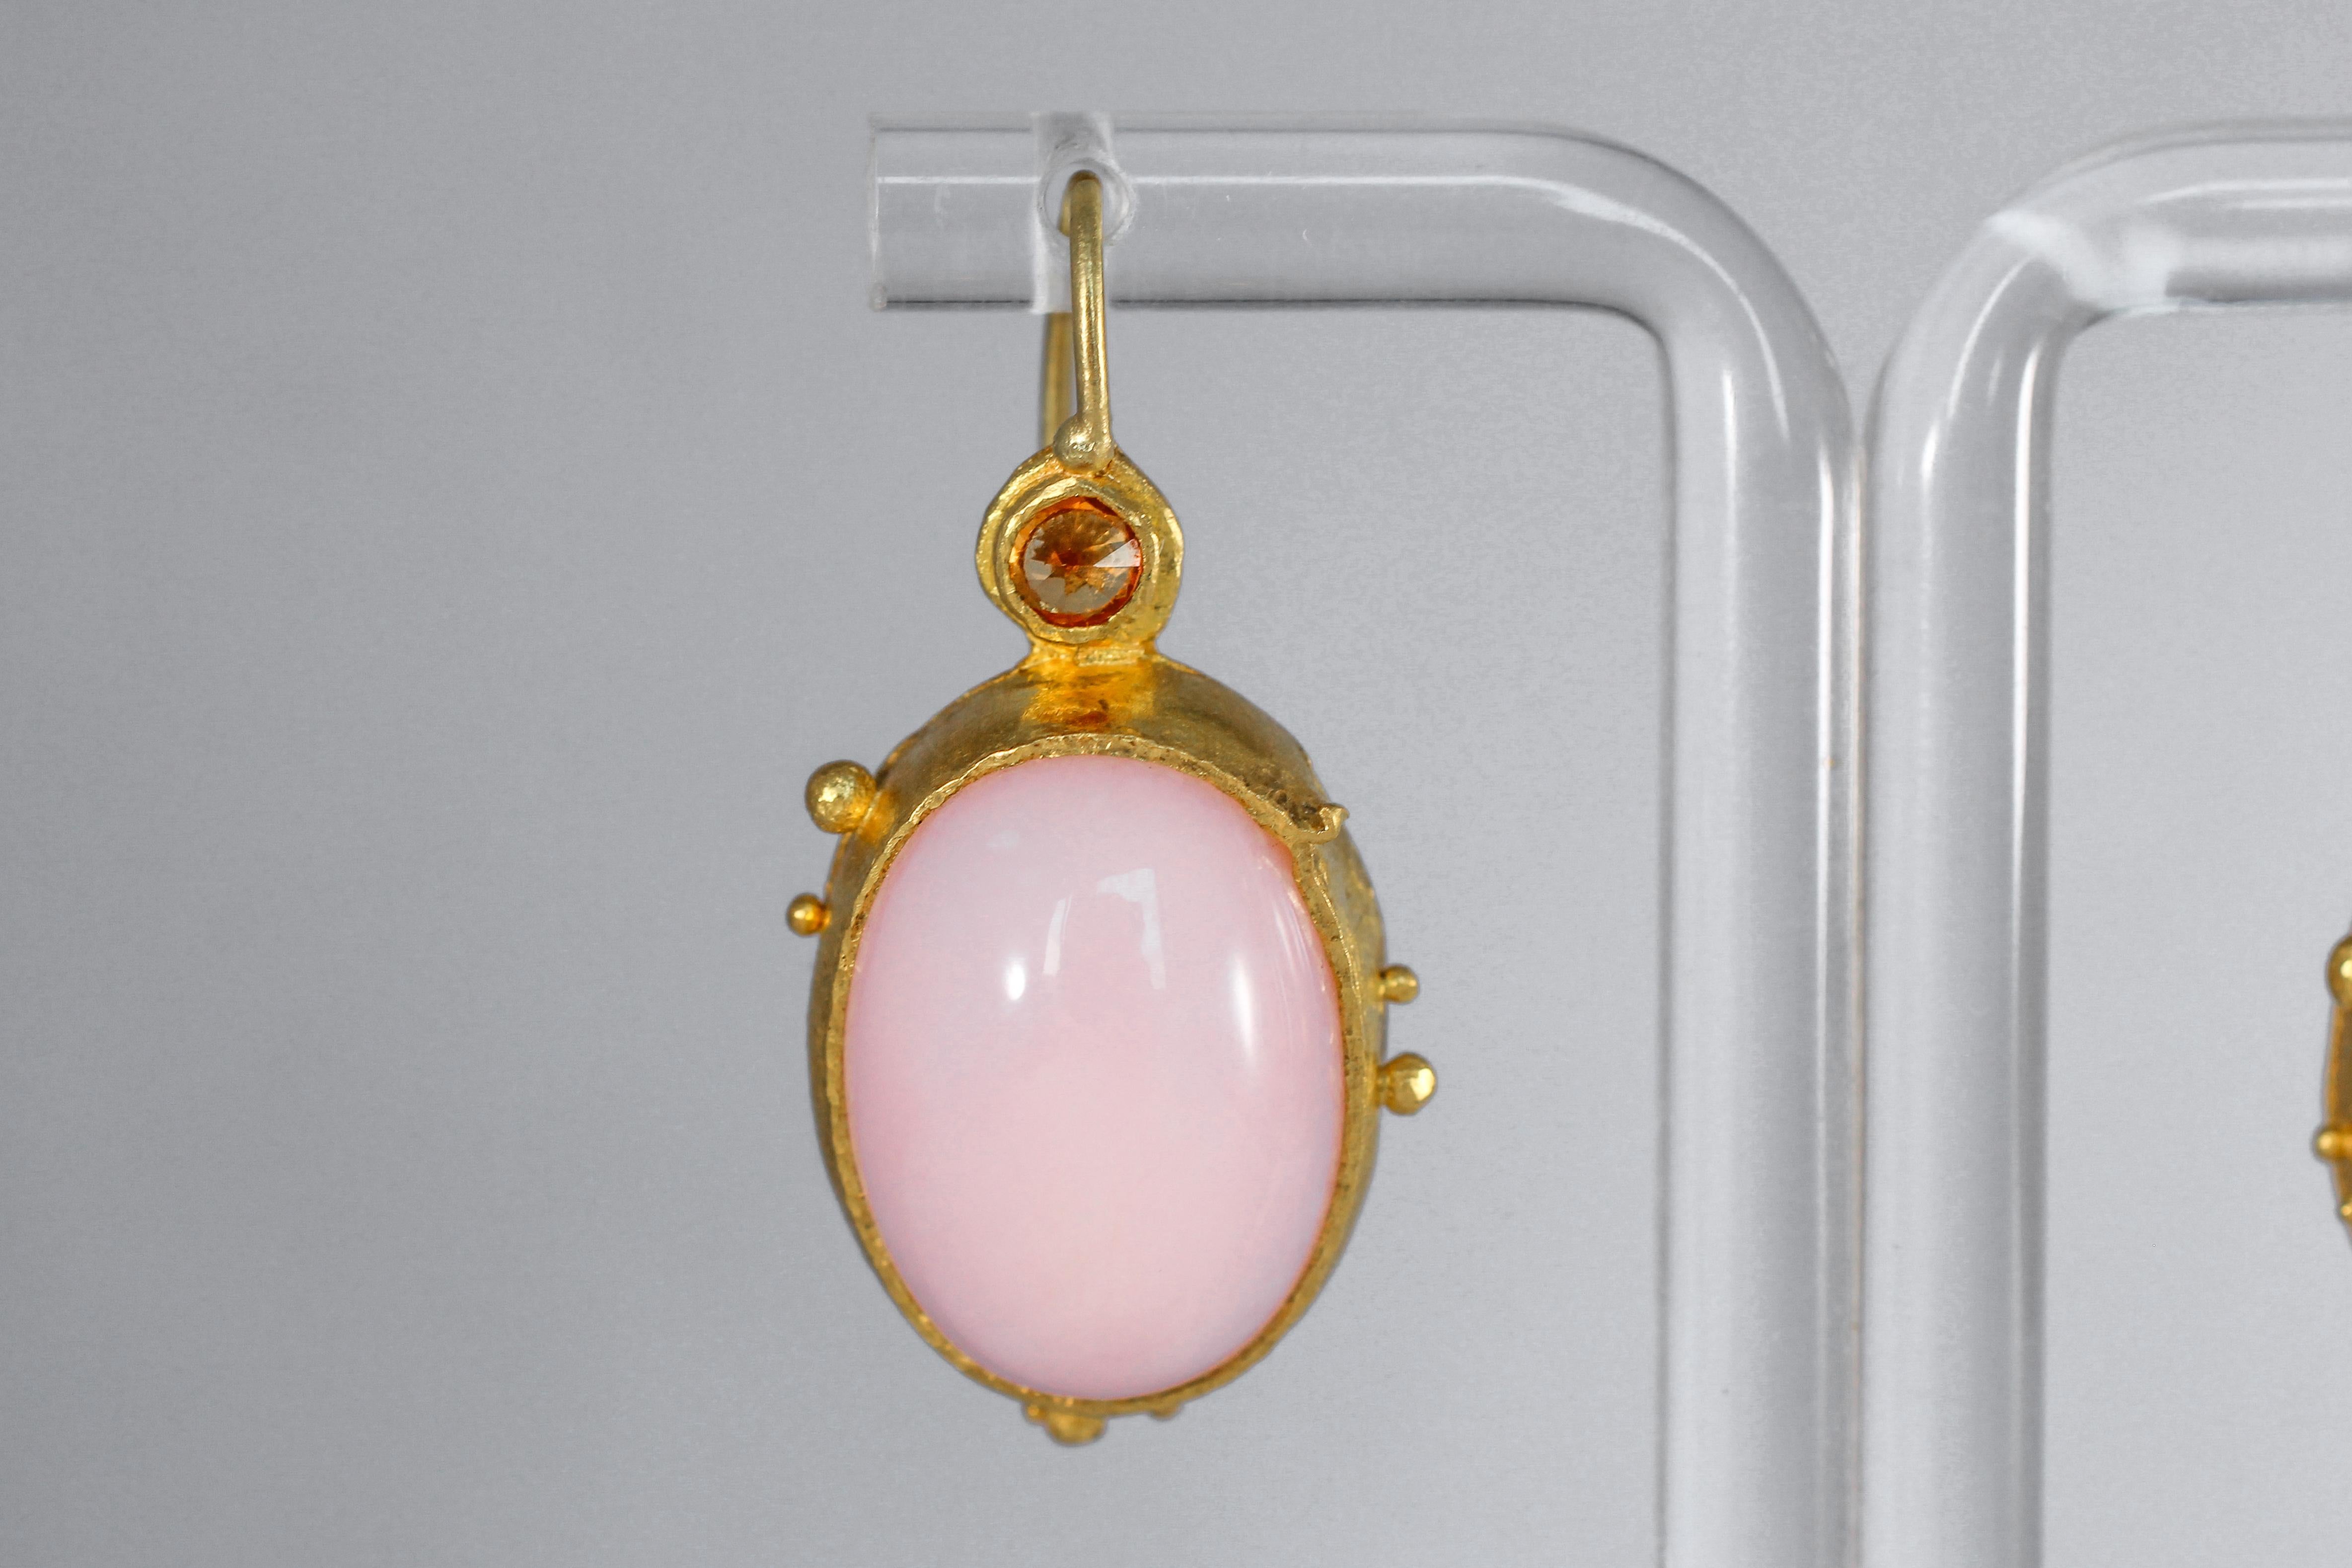 sapphire and opal earrings